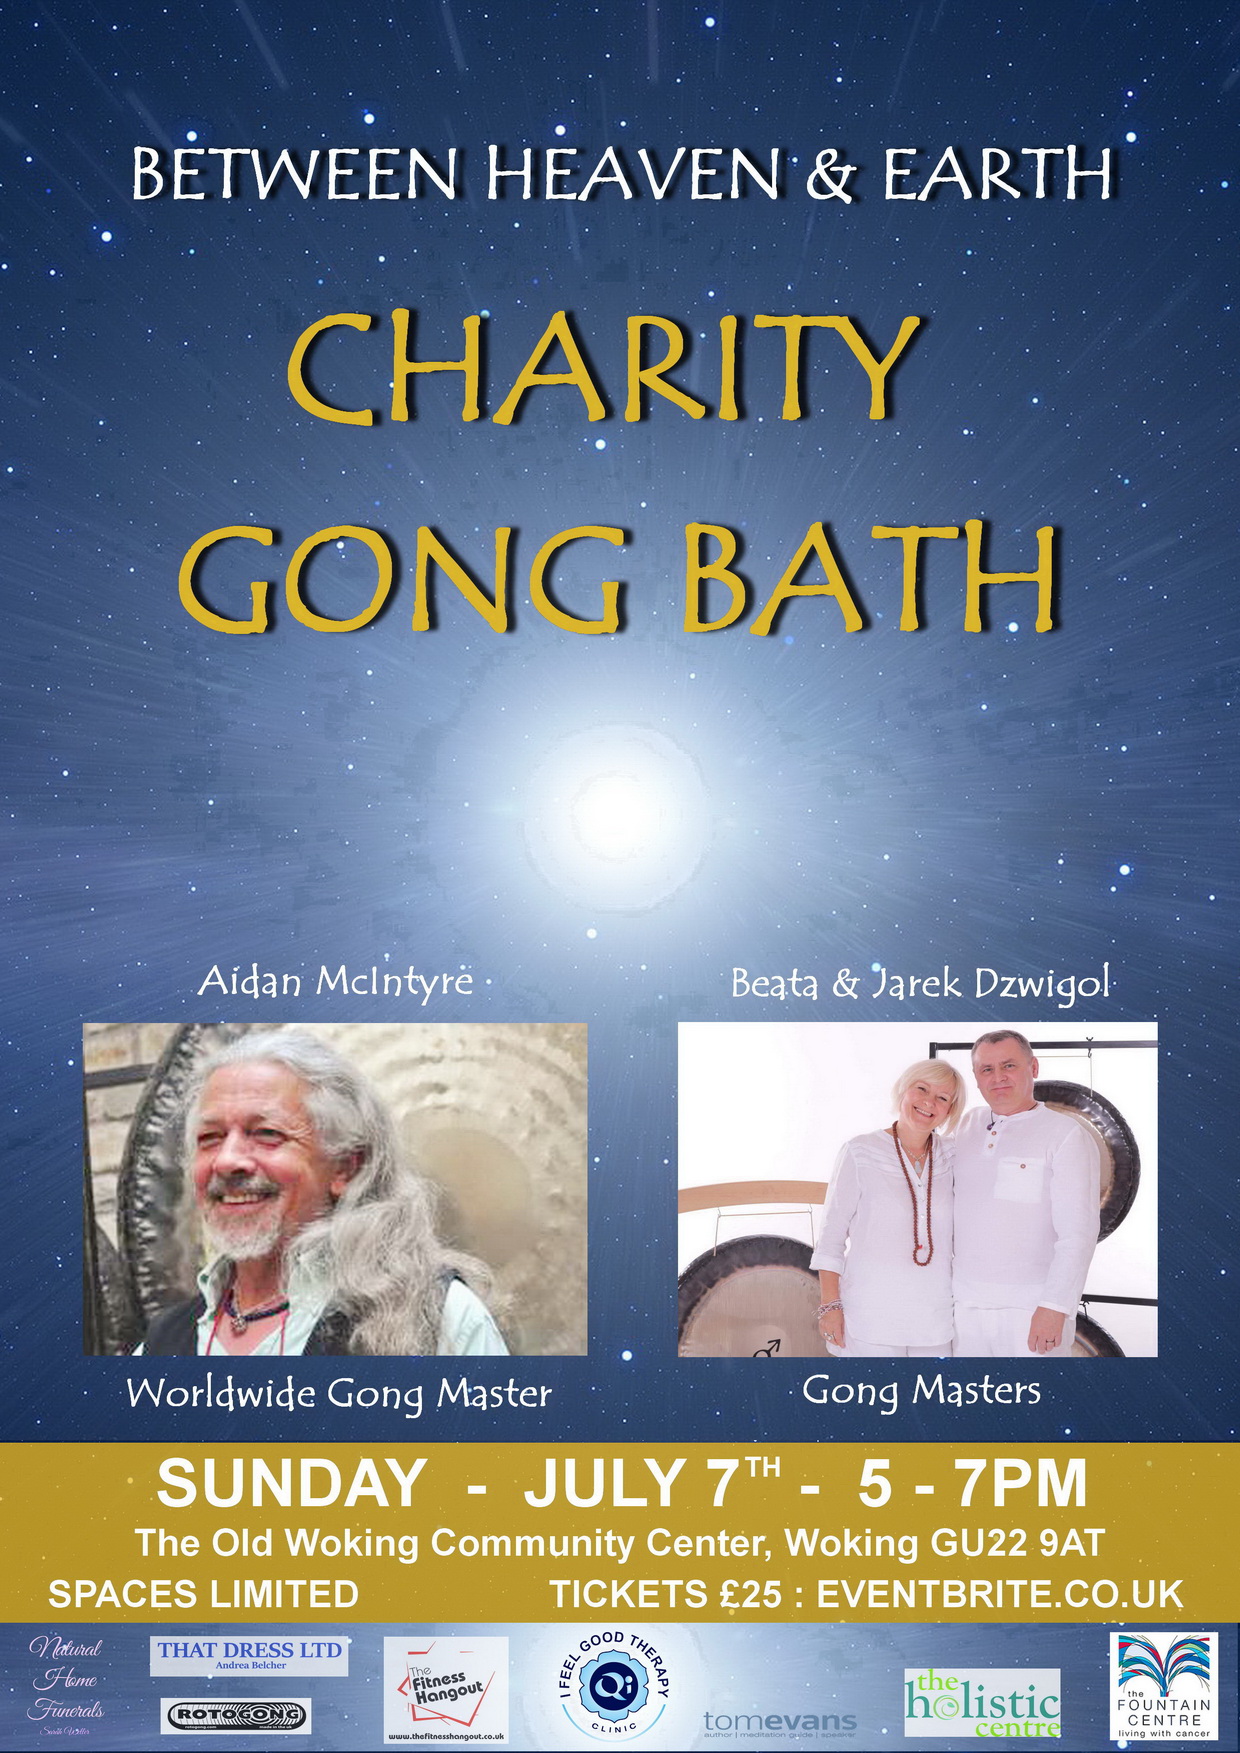 WOKING, SURREY - BETWEEN HEAVEN & EARTH - Charity Gong Bath with Aidan McIntyre